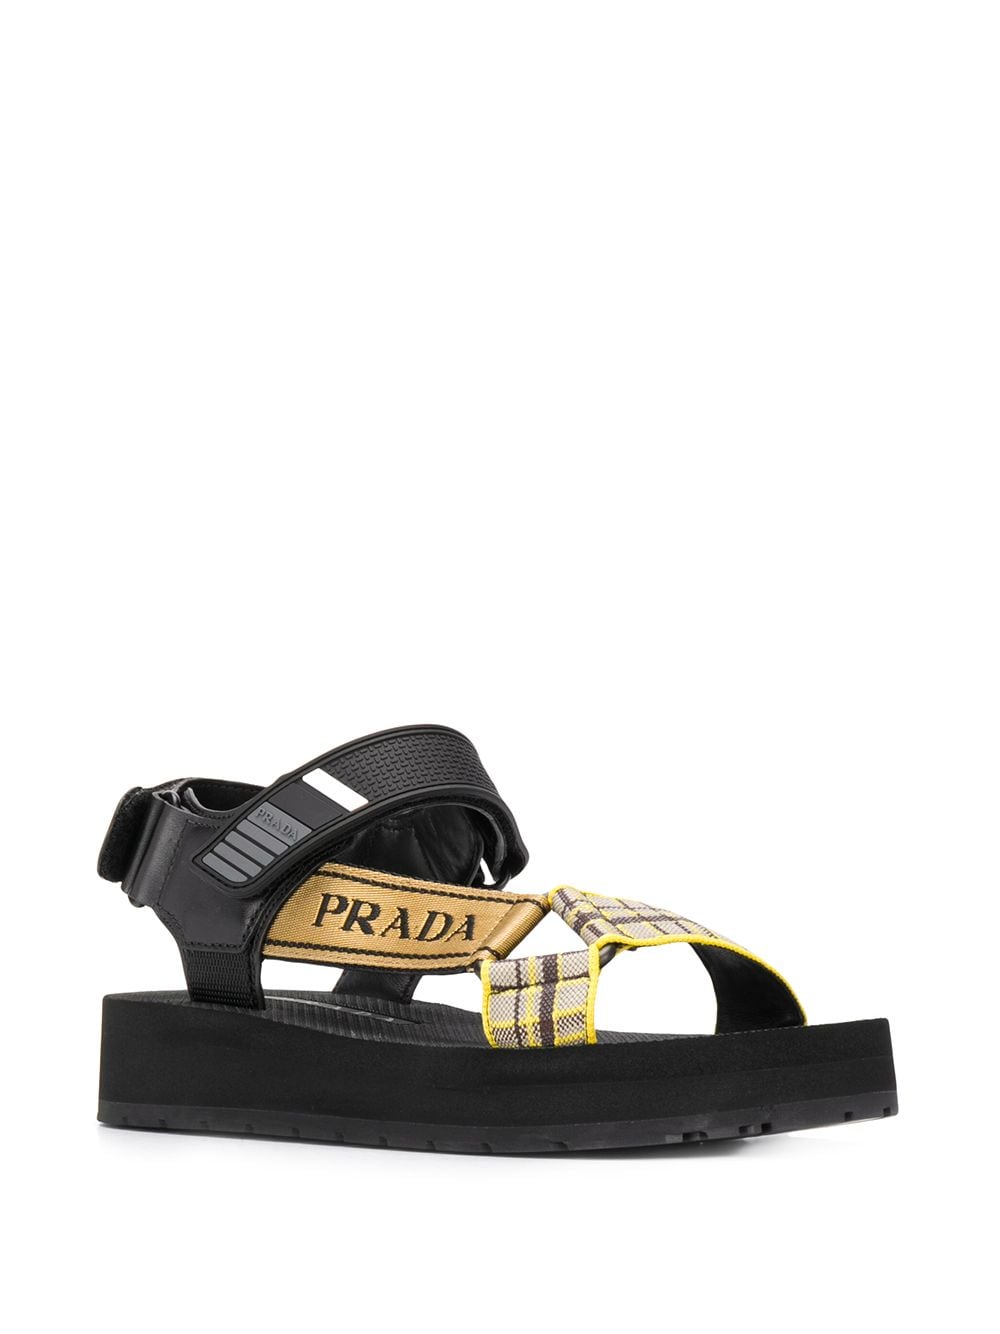 фото Prada сандалии на платформе с логотипом